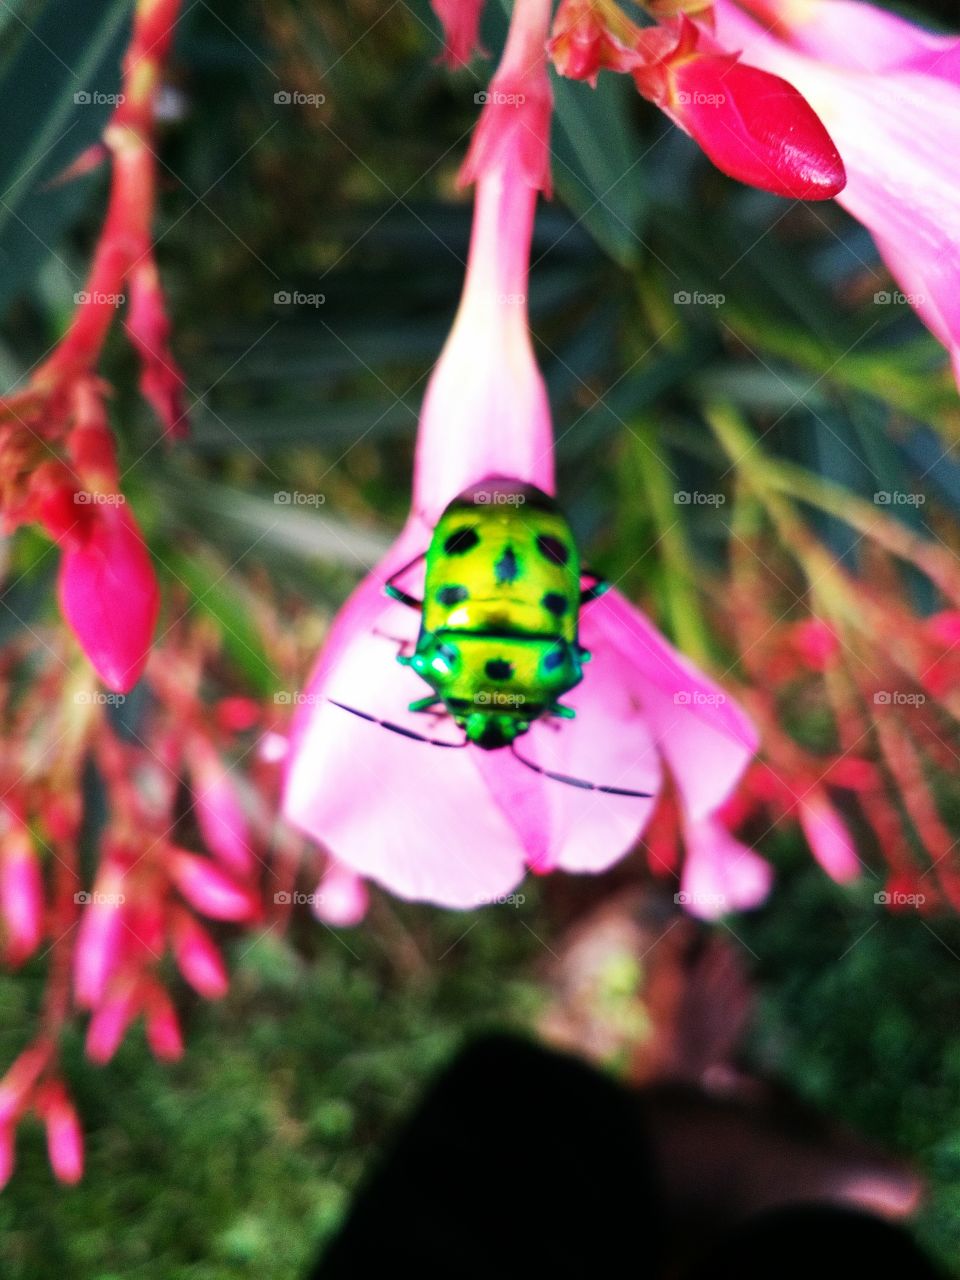 the beautiful beetle and very nice